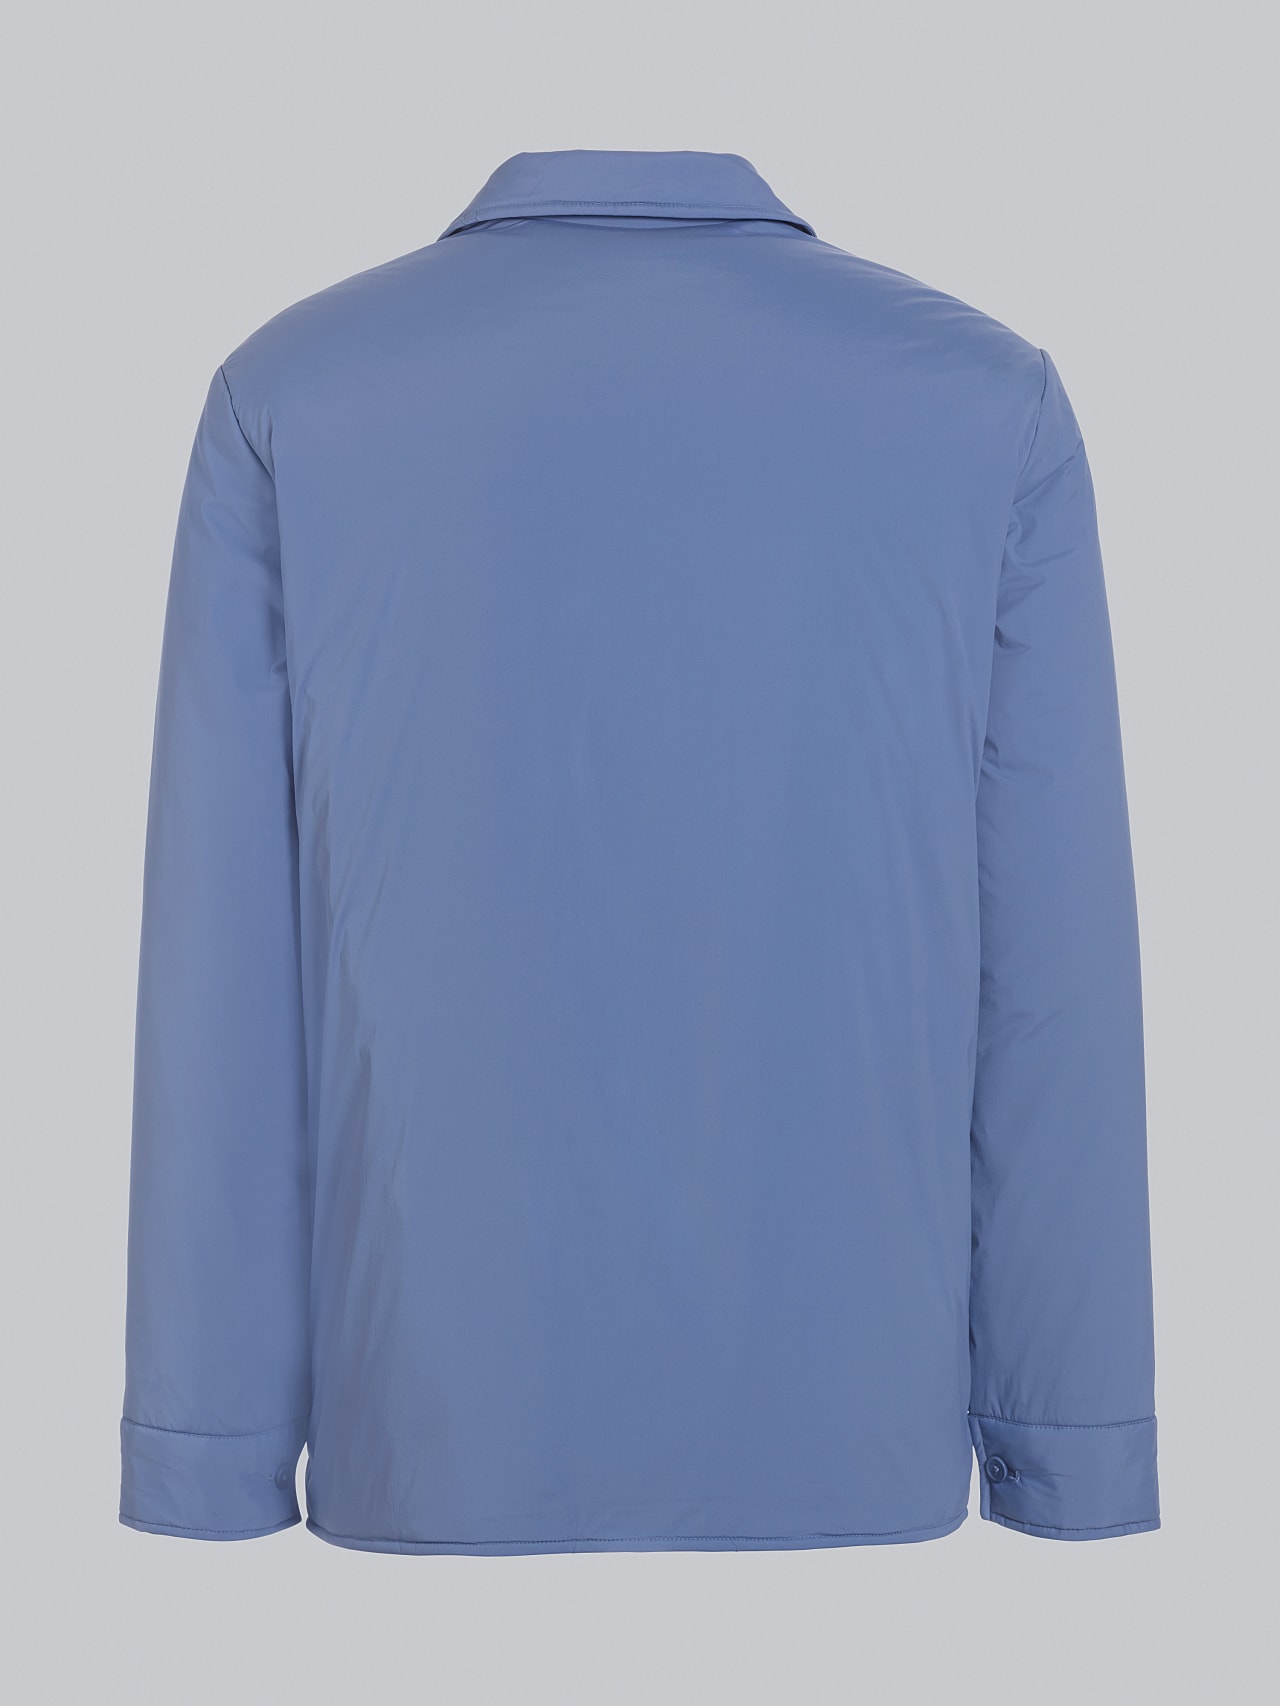 AlphaTauri | OVASU V1.Y5.02 | PrimaLoft® Overshirt Jacket in light blue for Men